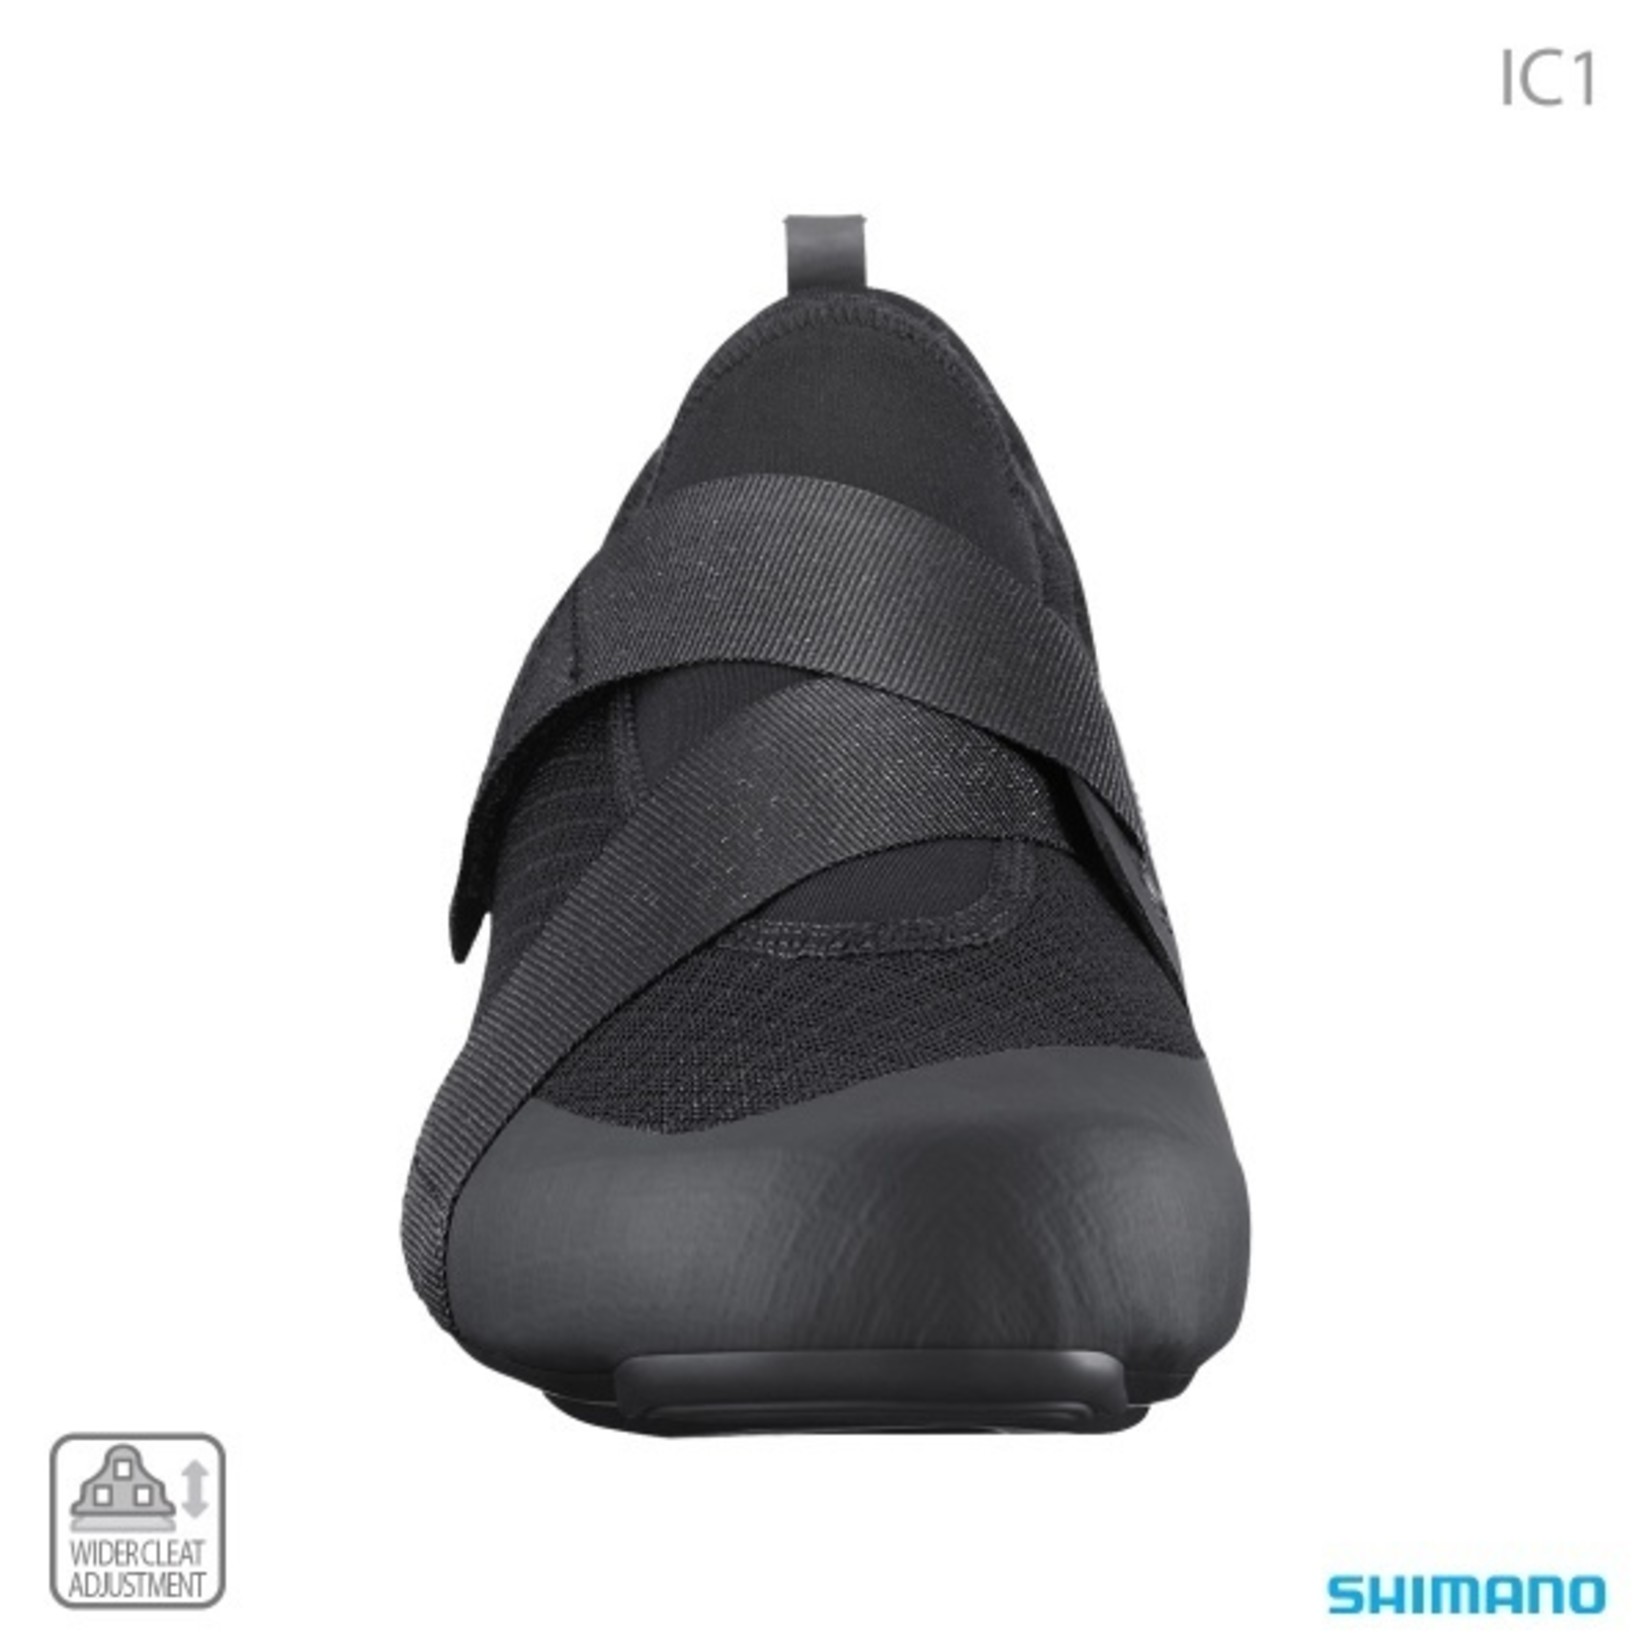 Shimano Shimano SH-IC100 Women's Indoor Comfortable Cycling Speed Shoes - Black